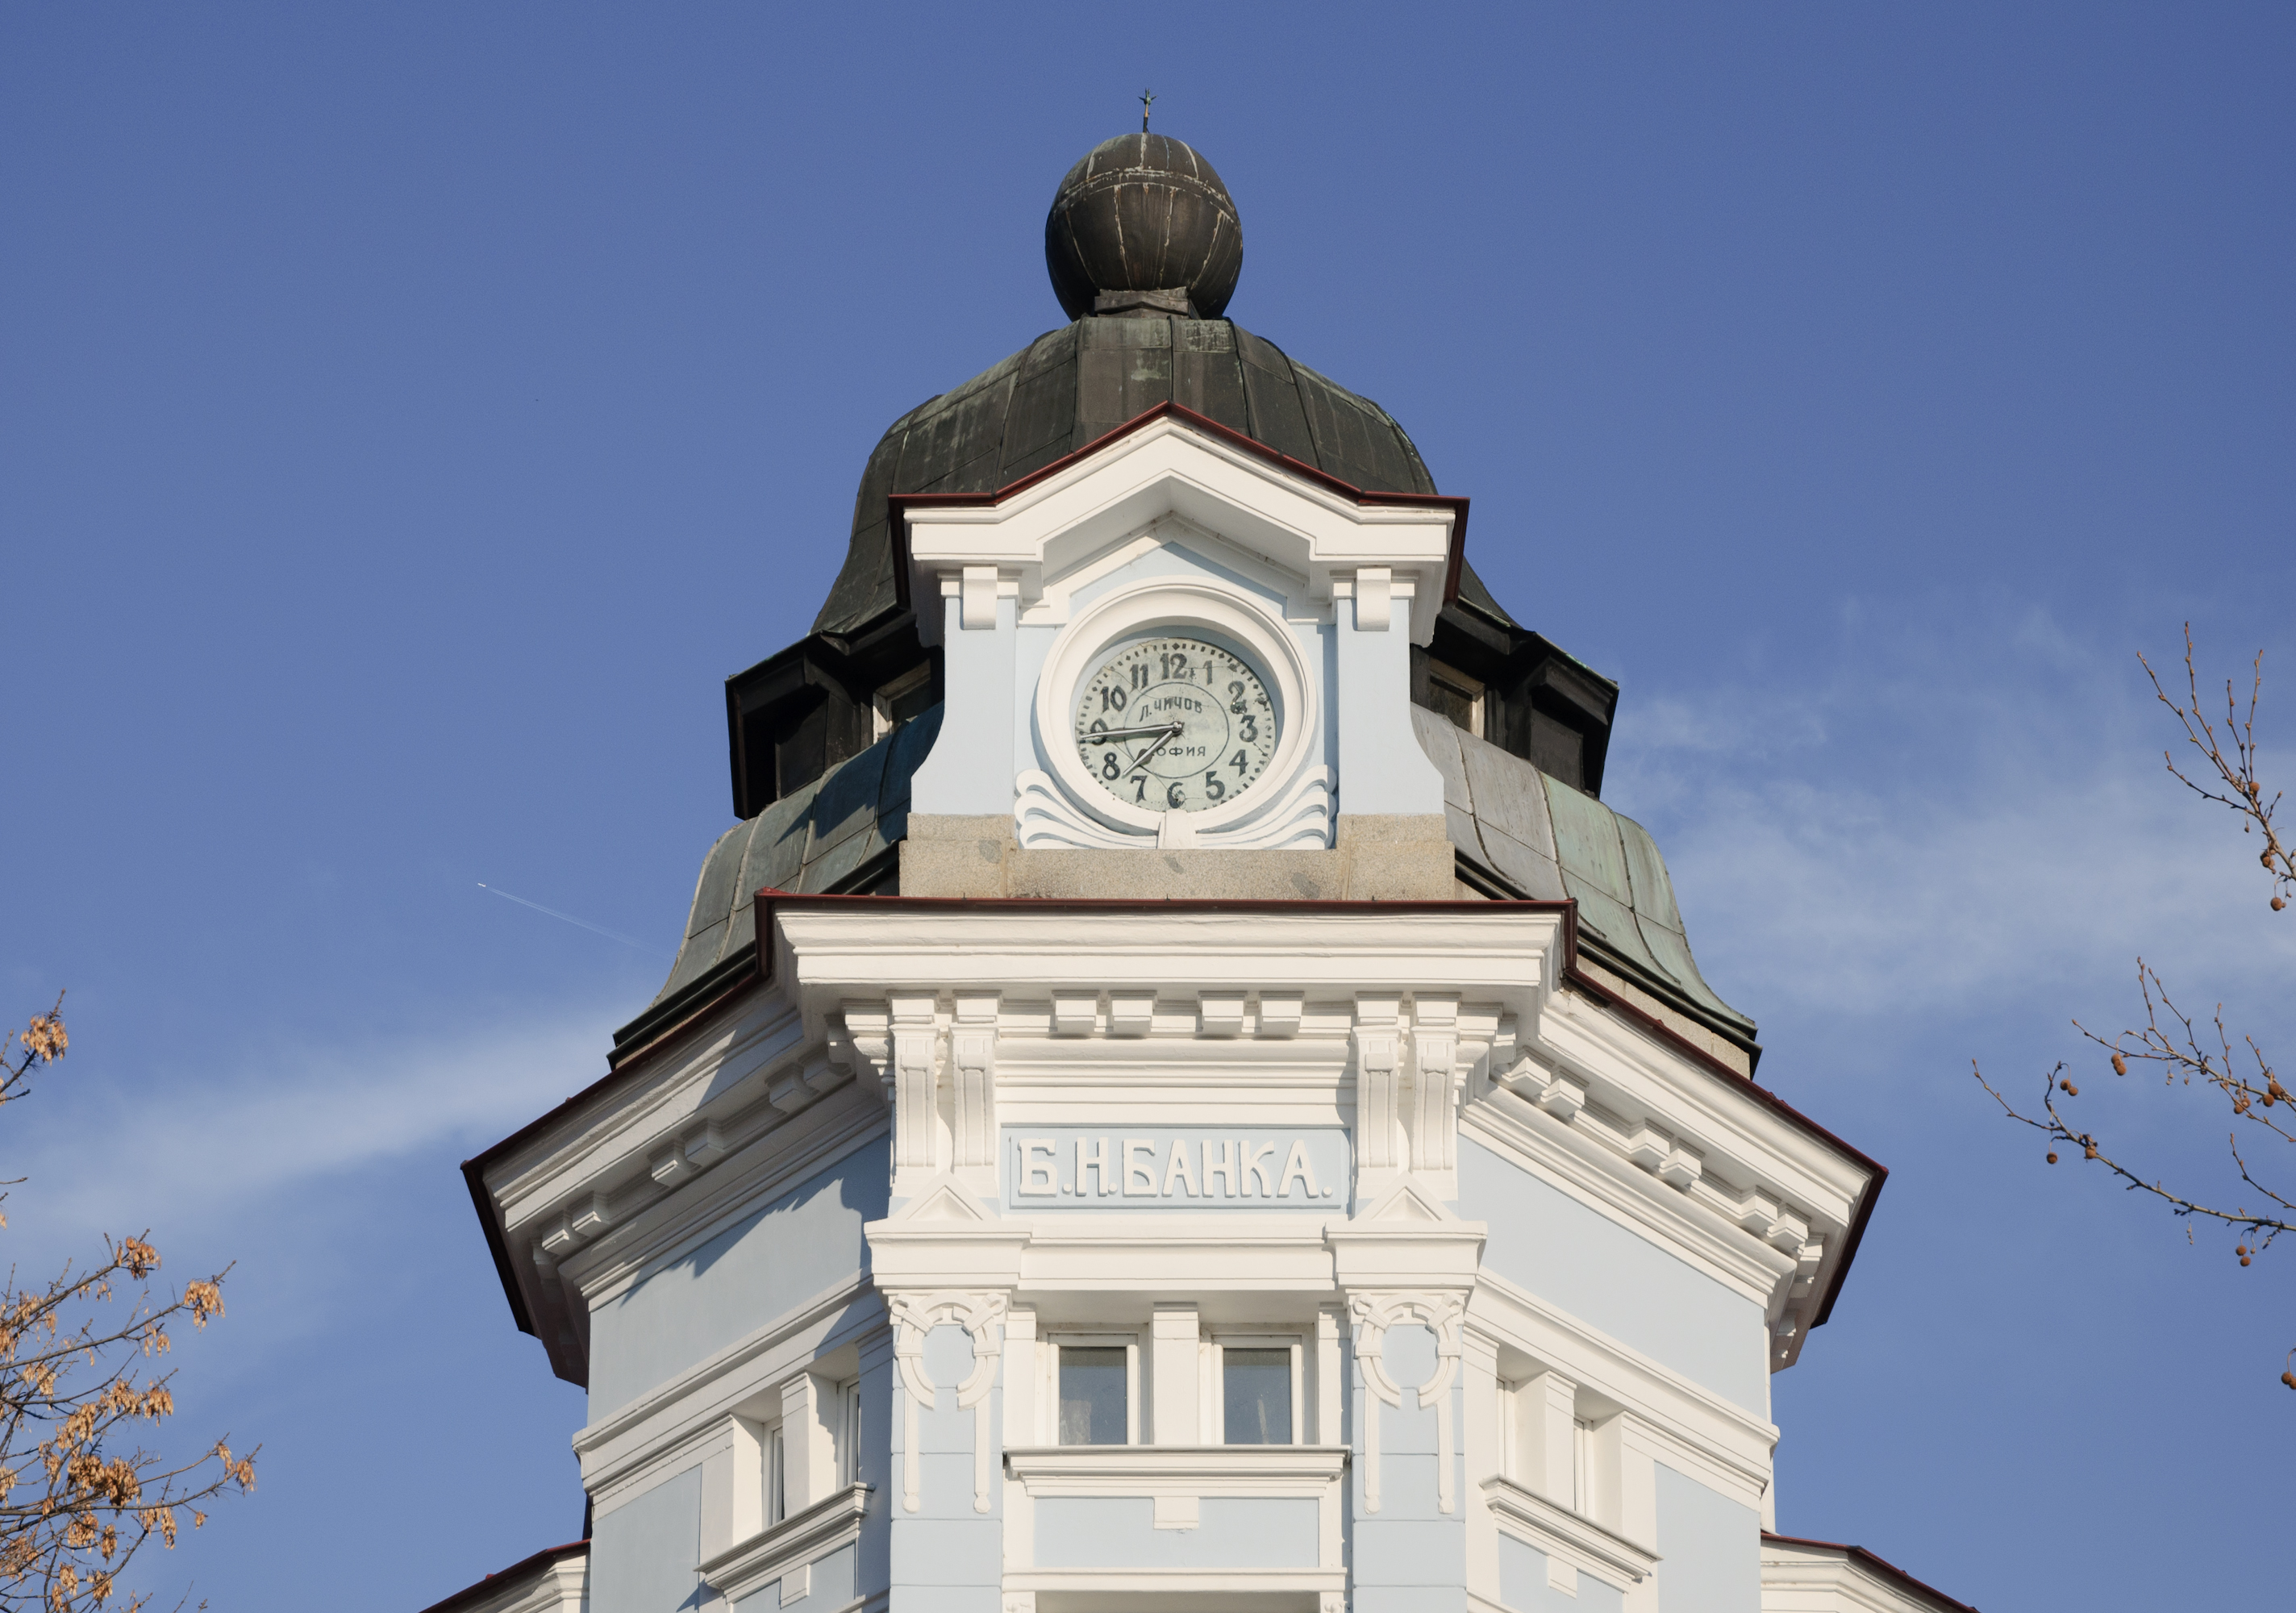 Bulgarian Bank Tower - Karlovo